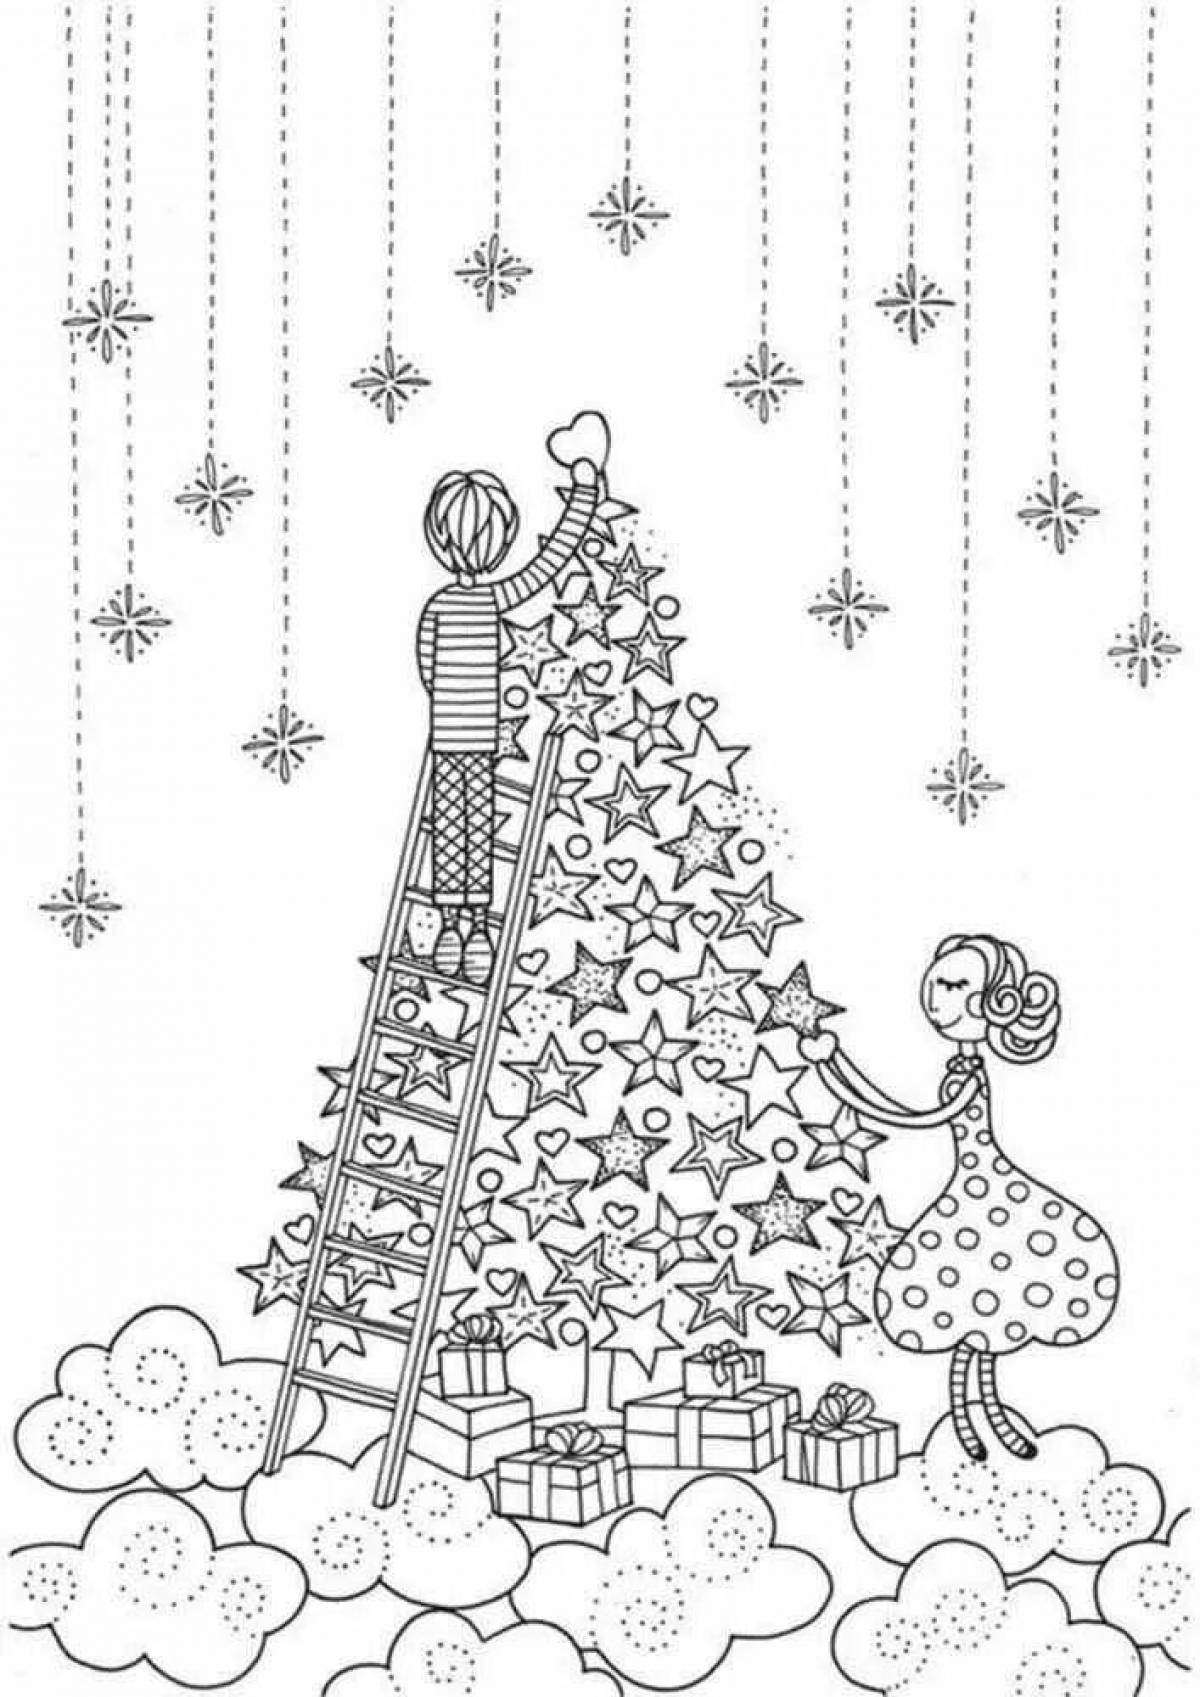 Rampant Christmas Wonders coloring page